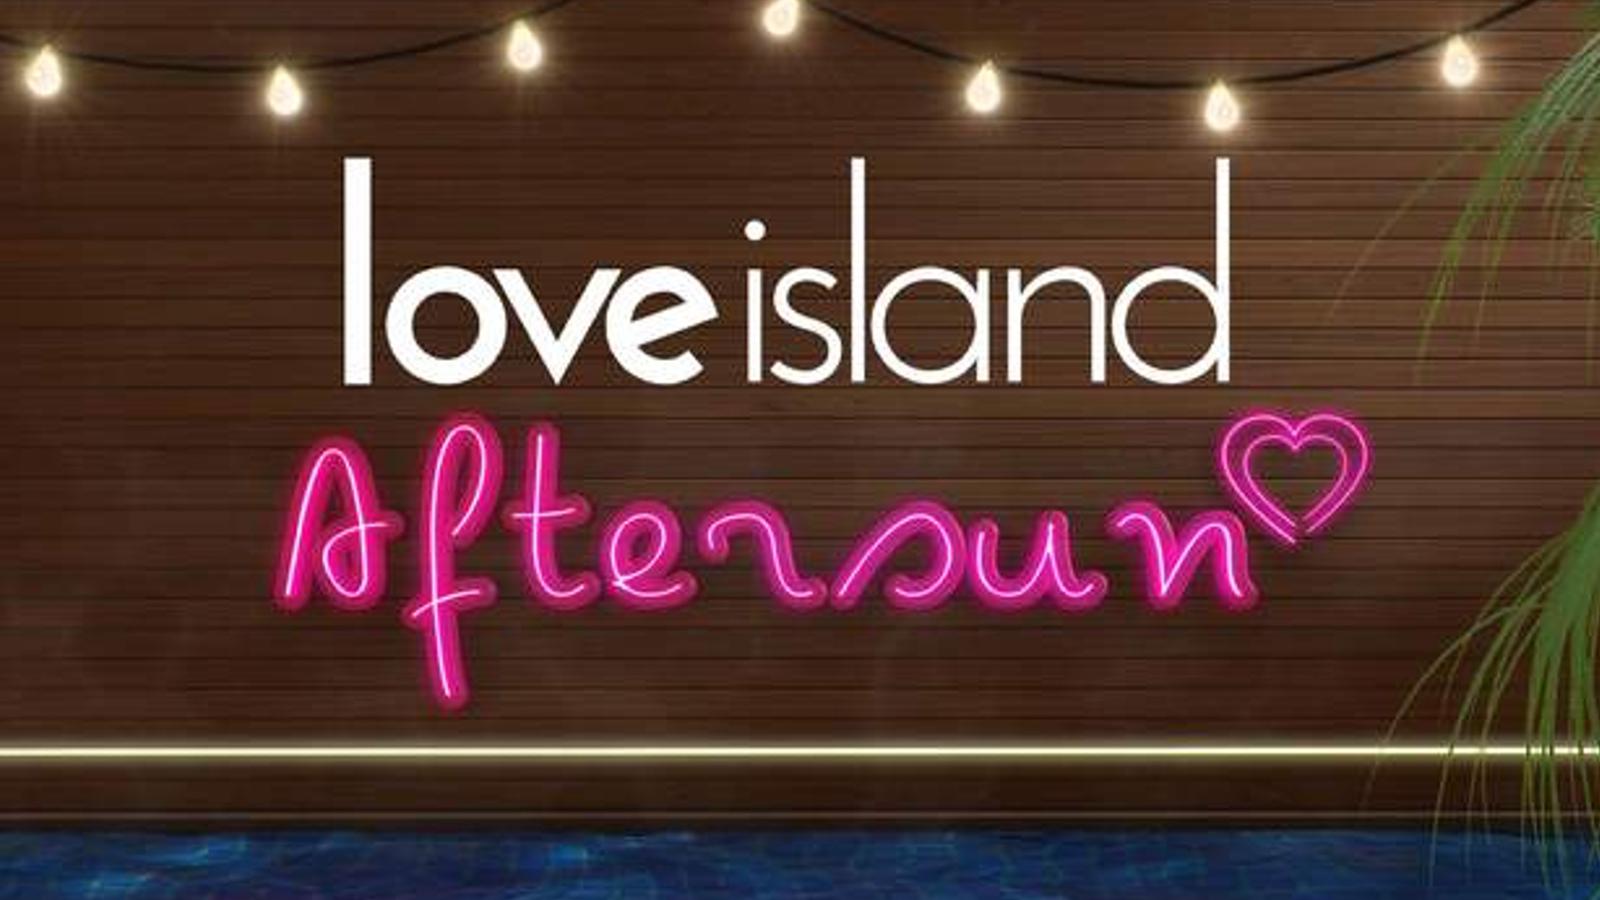 Love Island Aftersun logo